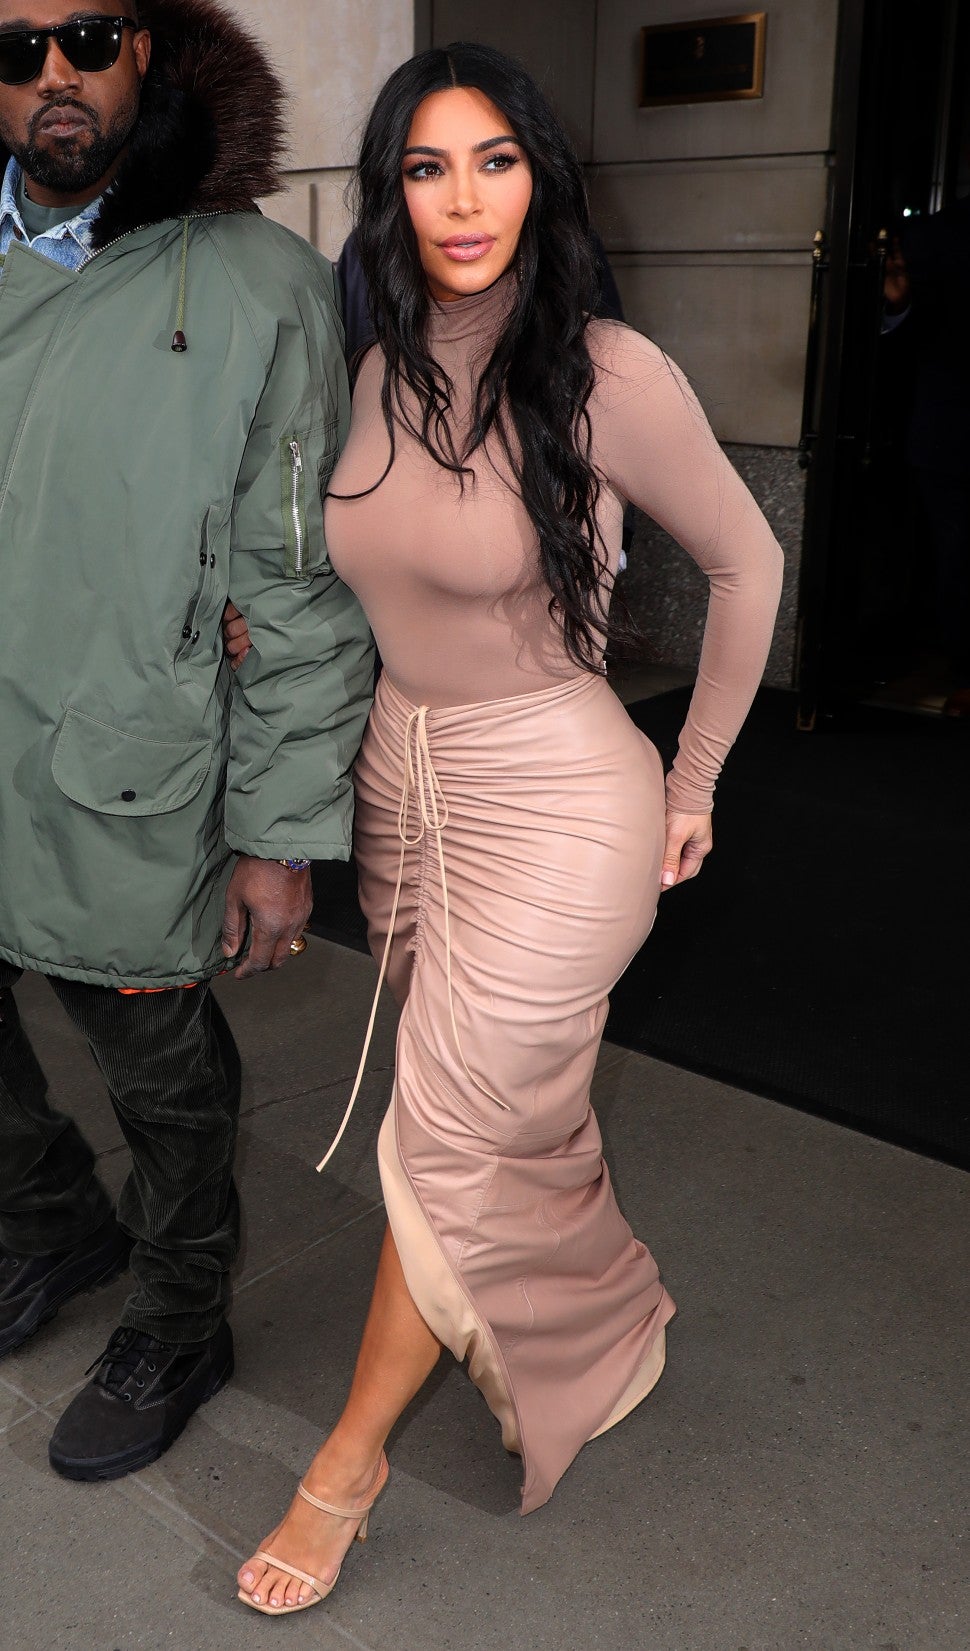 Kim Kardashian and Kanye West in NYC